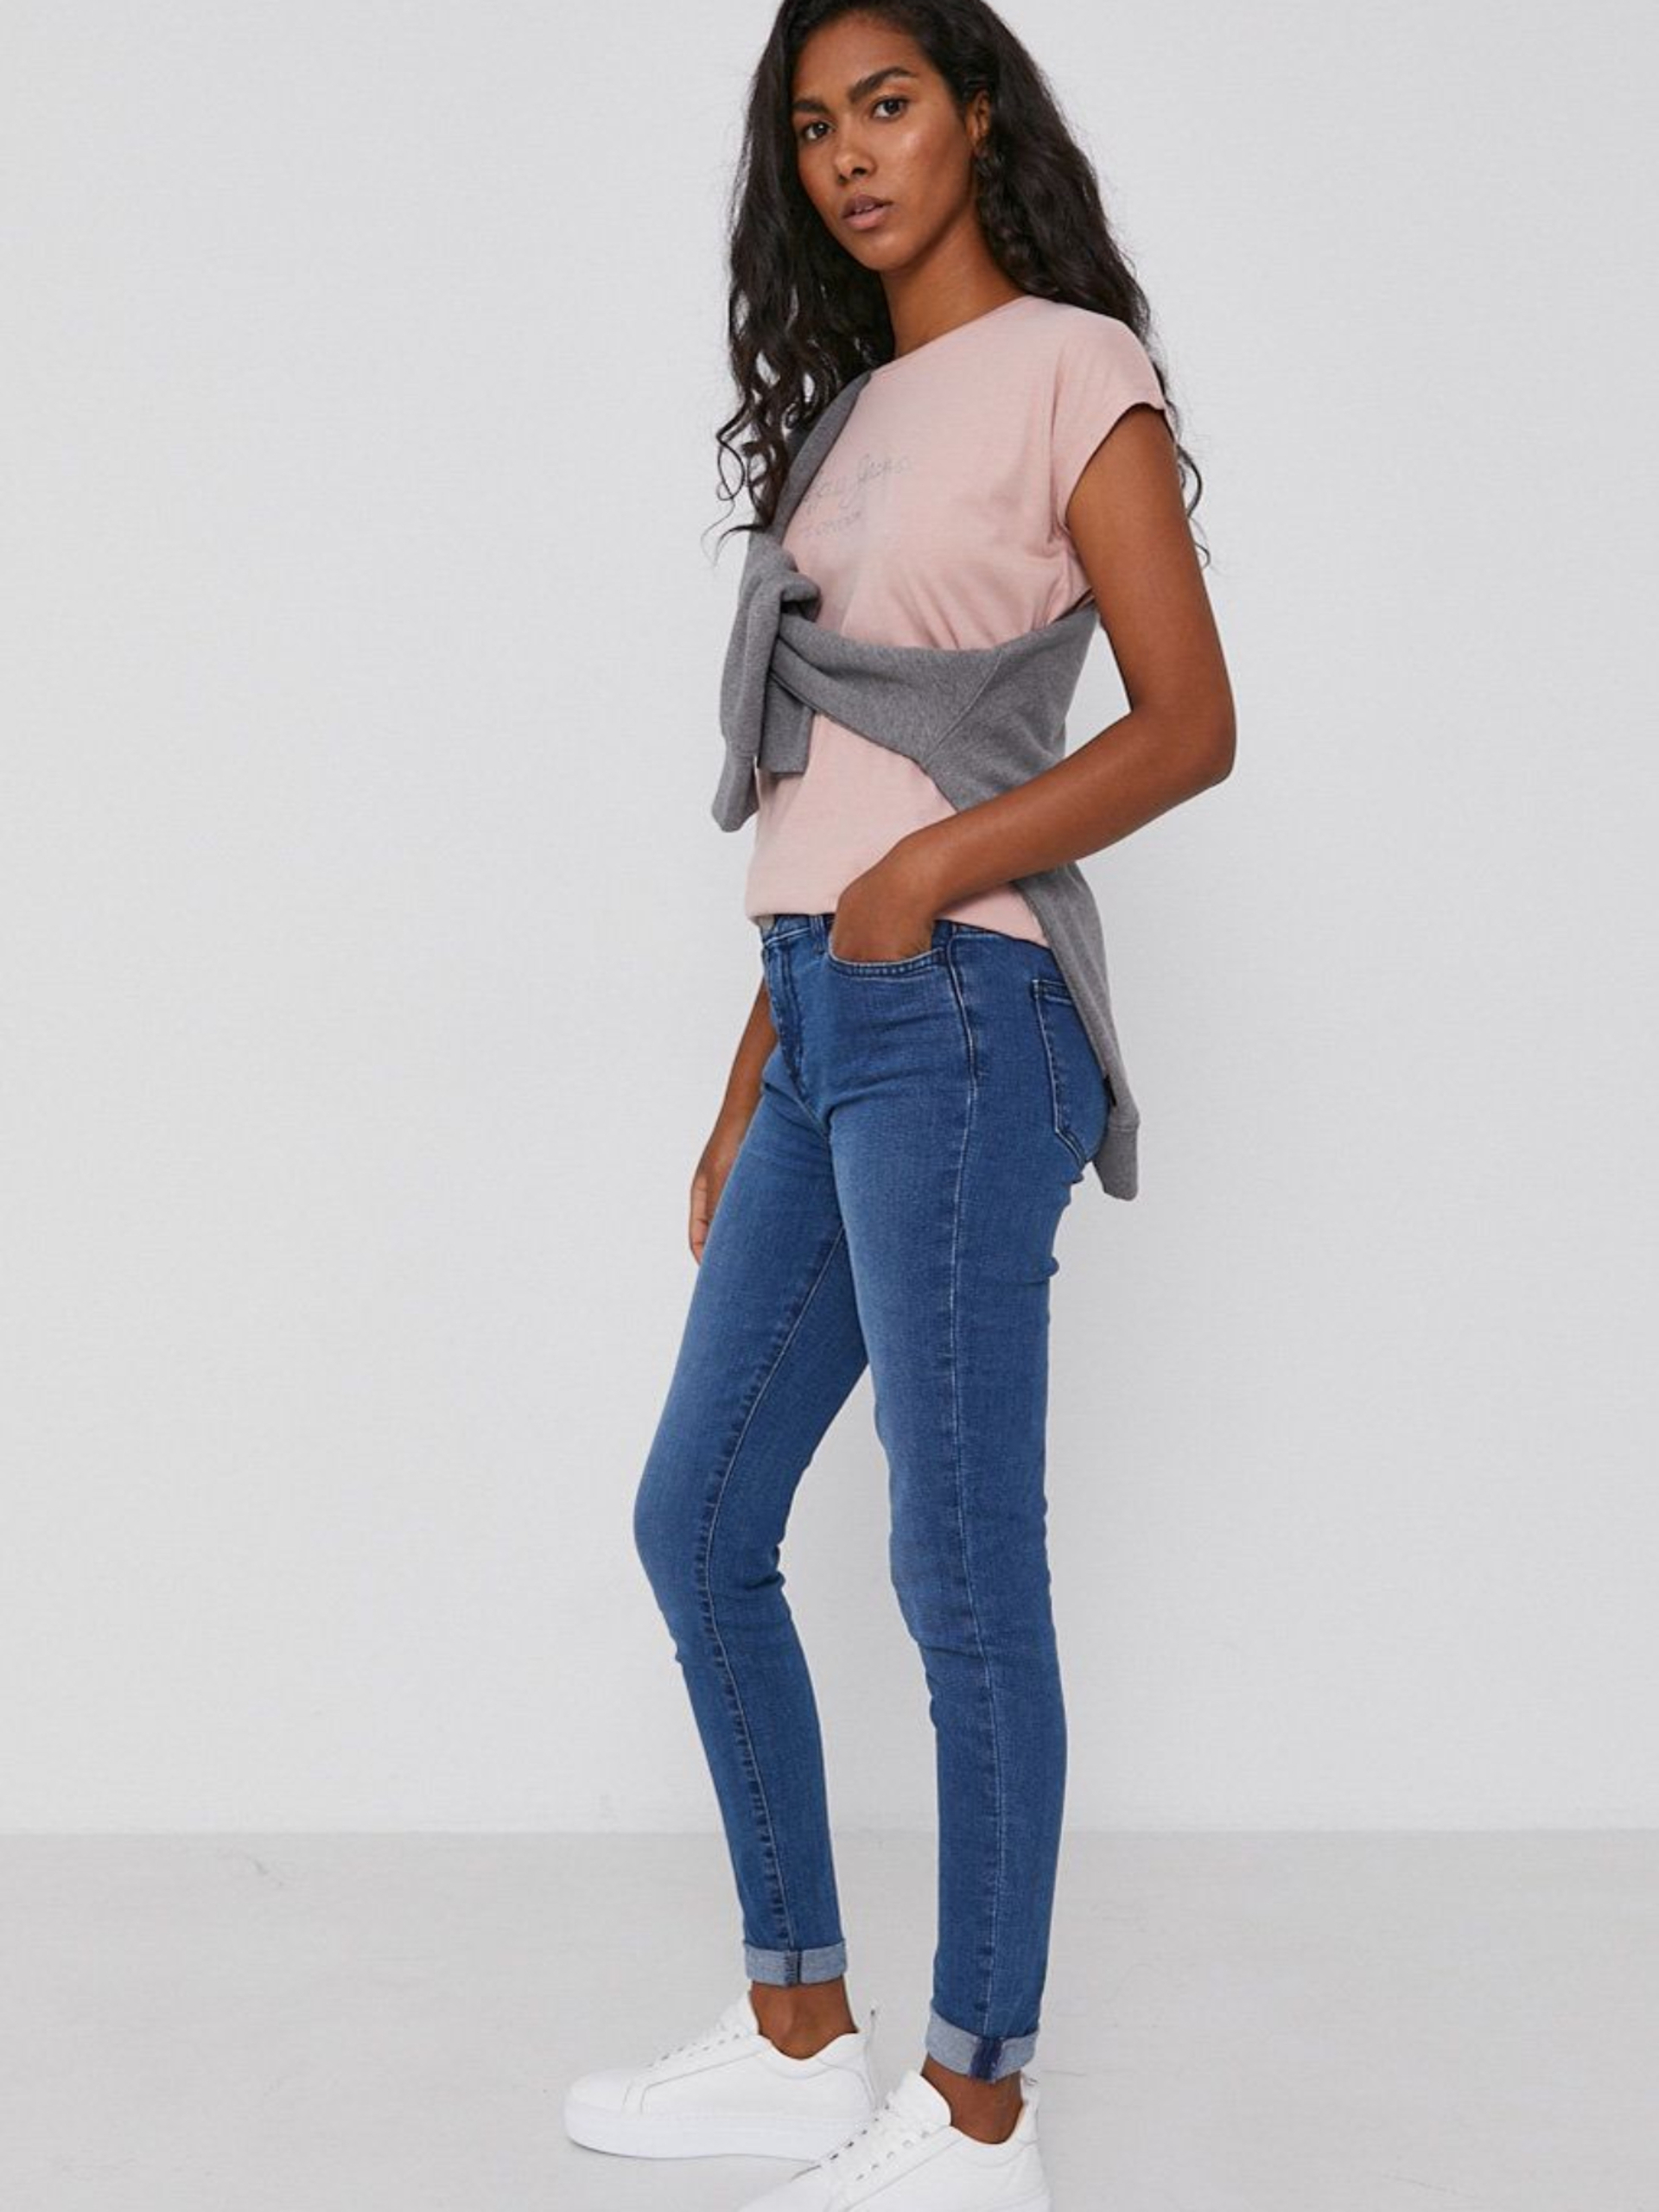 Pepe Jeans dámské růžové tričko BONNIE - XS (305)